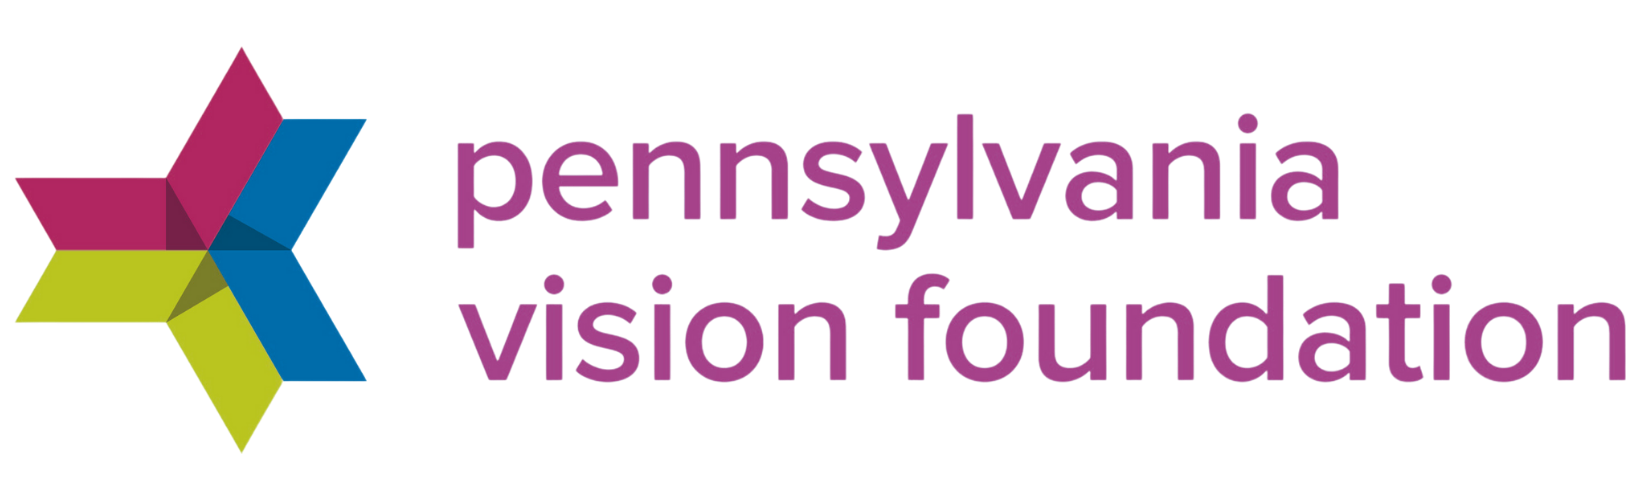 PAVF Transparent Logo